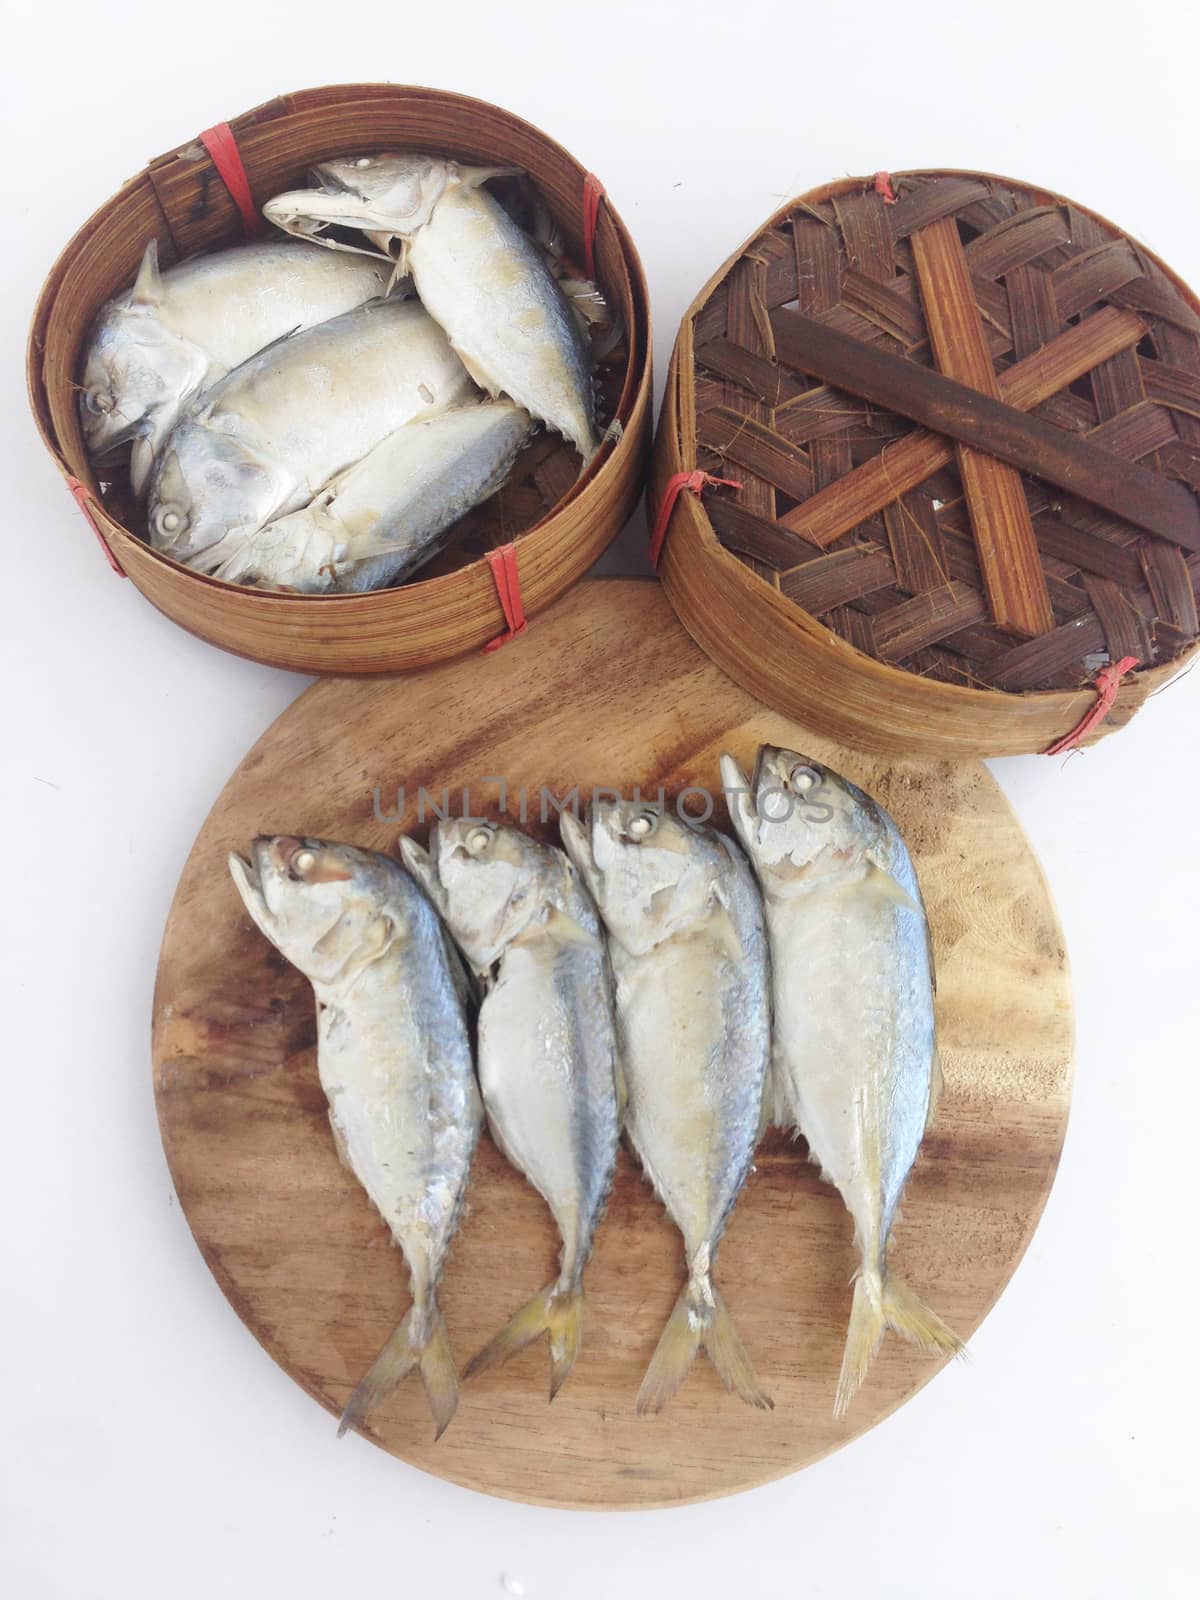 short mackerel on cutting board with fish basket